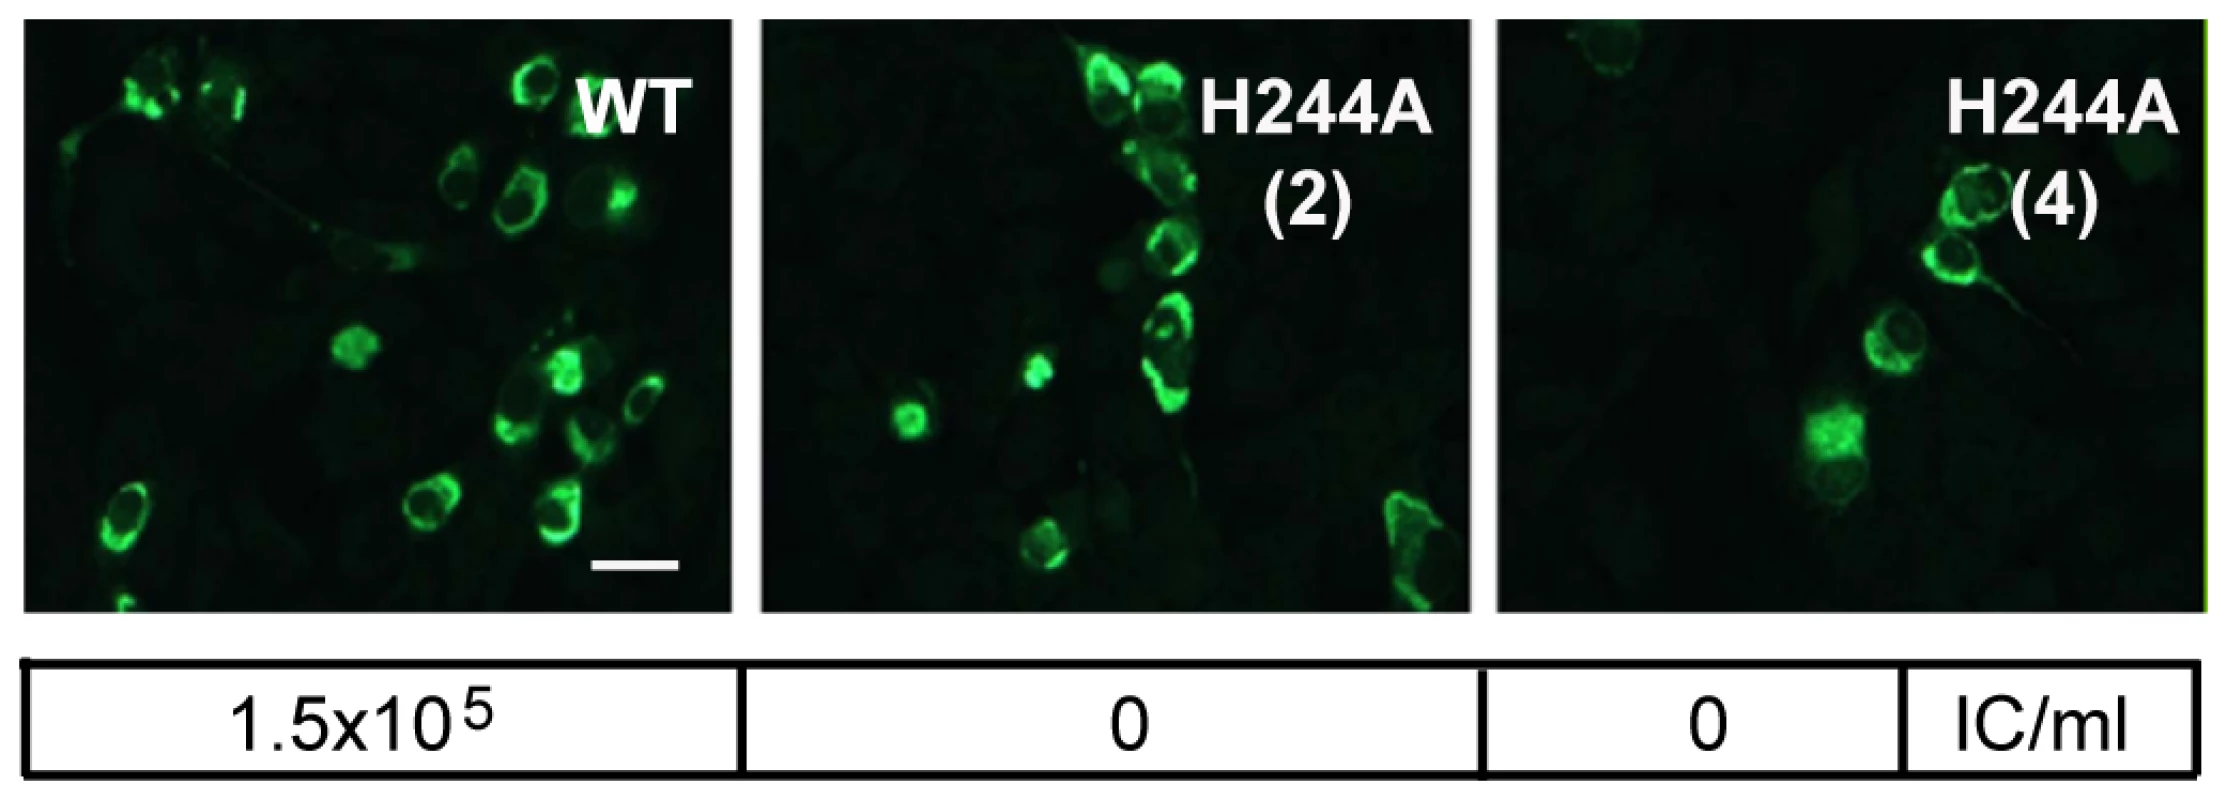 DENV E H244A mutation inhibits virus infection.